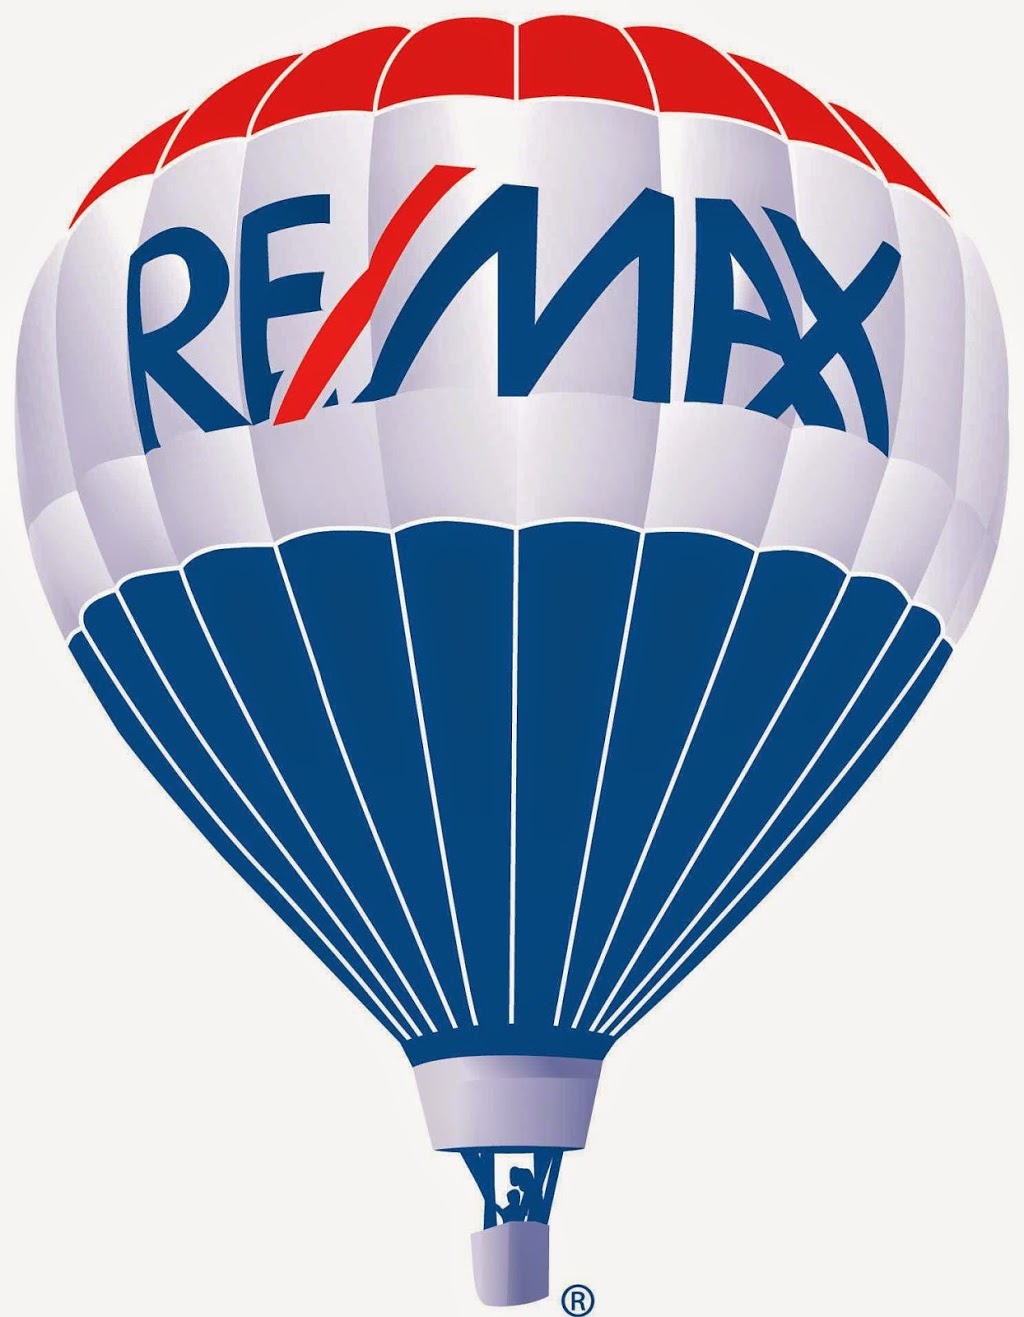 RE/MAX Accord | 39644 Mission Blvd, Fremont, CA 94536, USA | Phone: (510) 739-4000